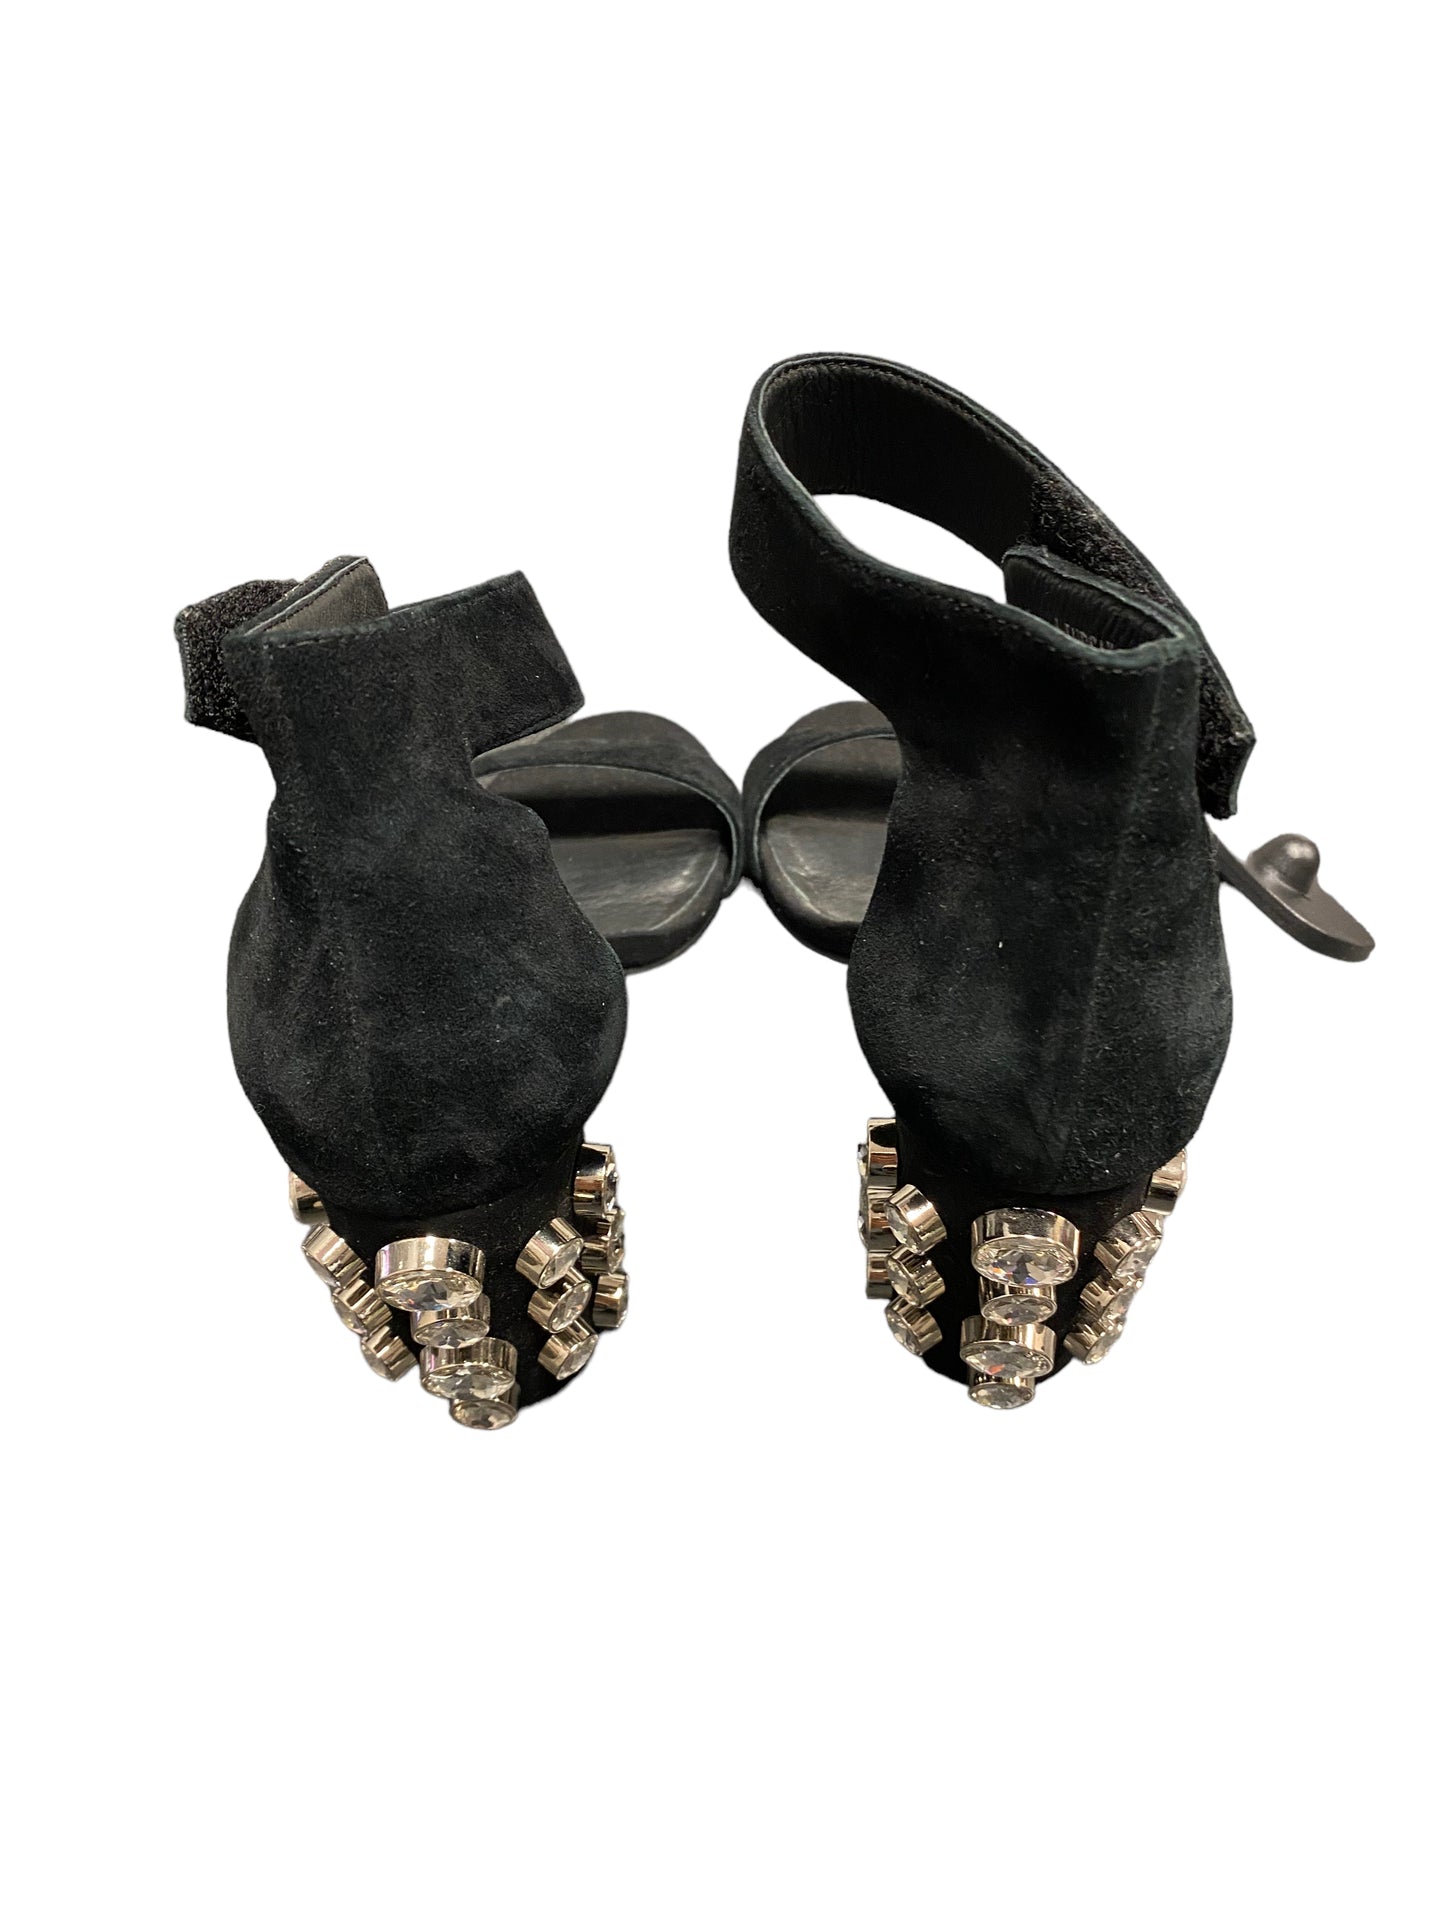 Black Shoes Heels Block Jeffery Campbell, Size 8.5